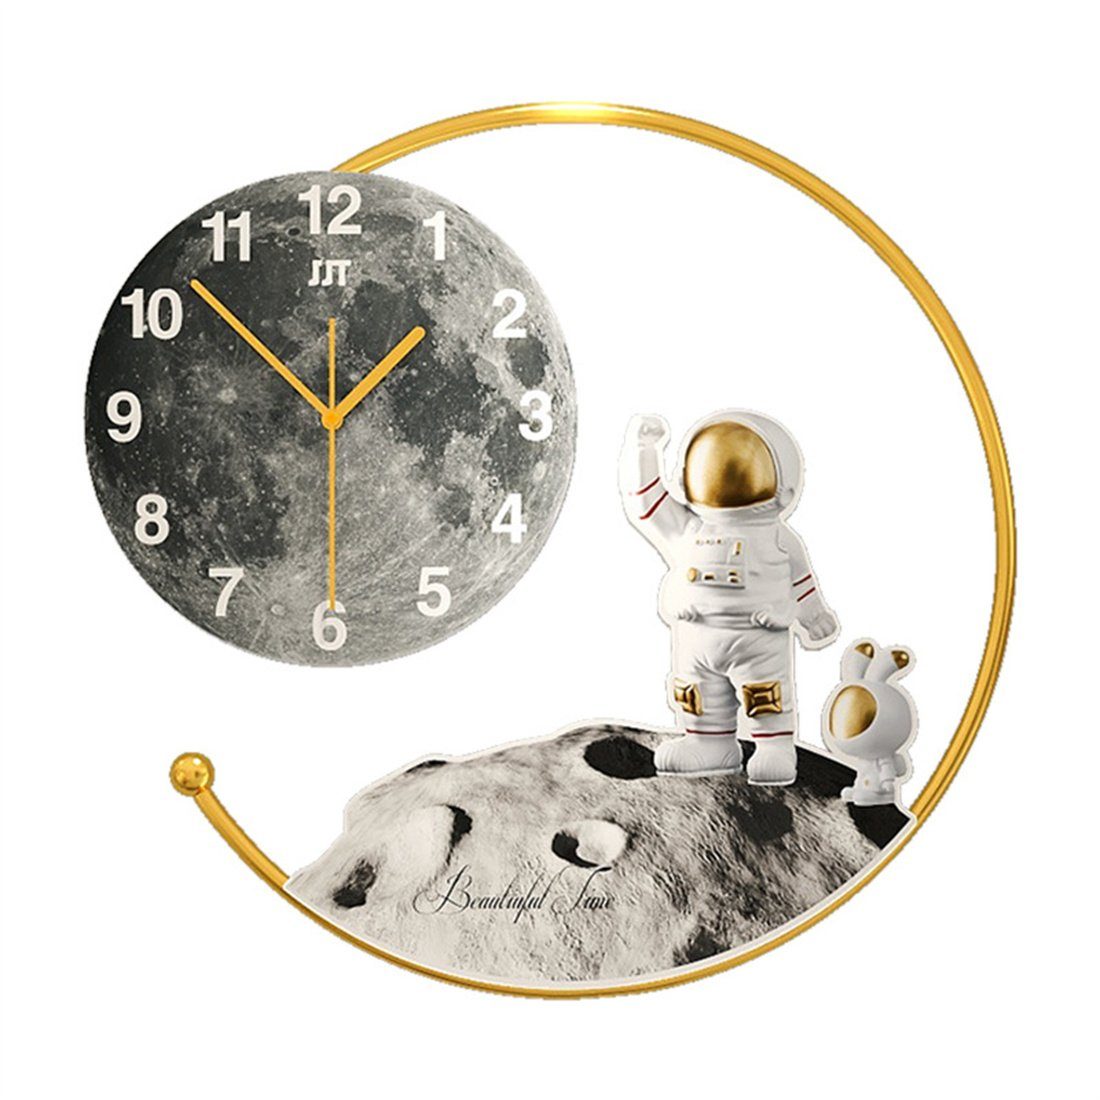 DÖRÖY Wanduhr 40cm moderne Uhr Astronaut Wanduhr,dekorative kreative stille Wanduhr